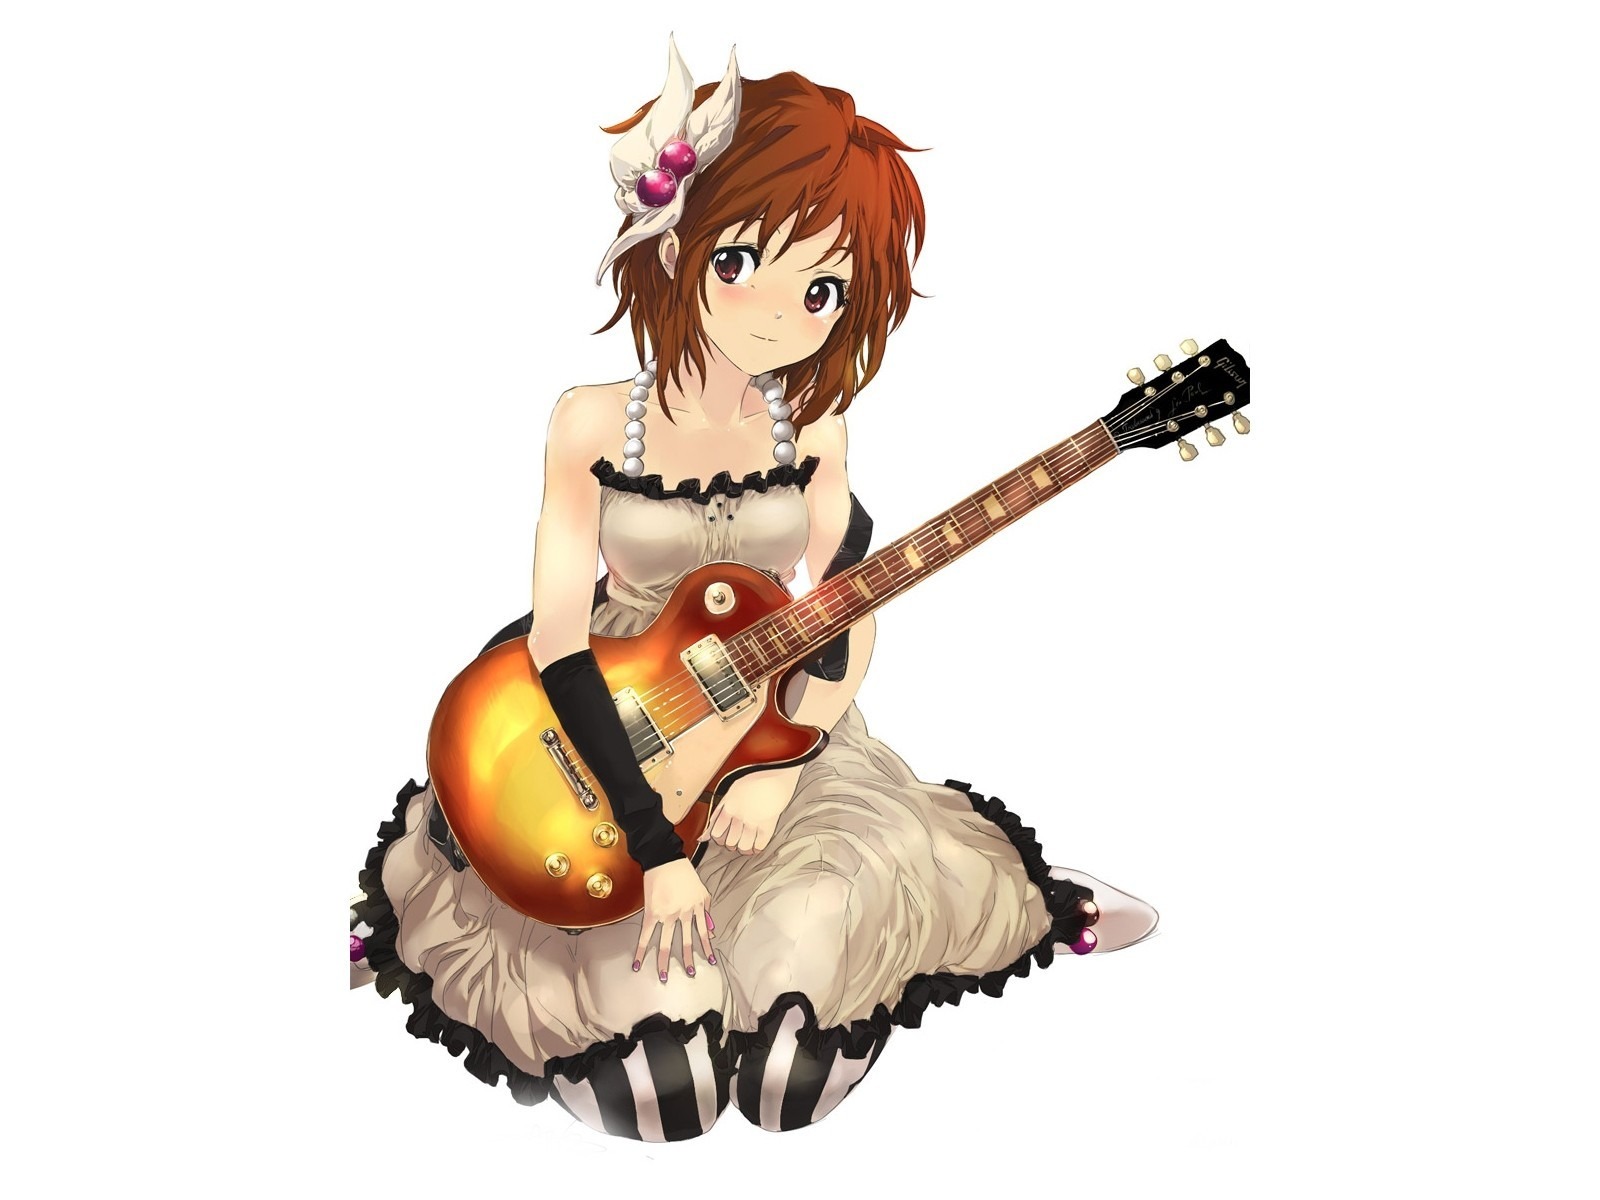 Download wallpaper 1600x1200 guitar and yui hirasawa, k-on!, anime, cute  anime girl, standard 4:3 fullscreen 1600x1200 hd background, 3048